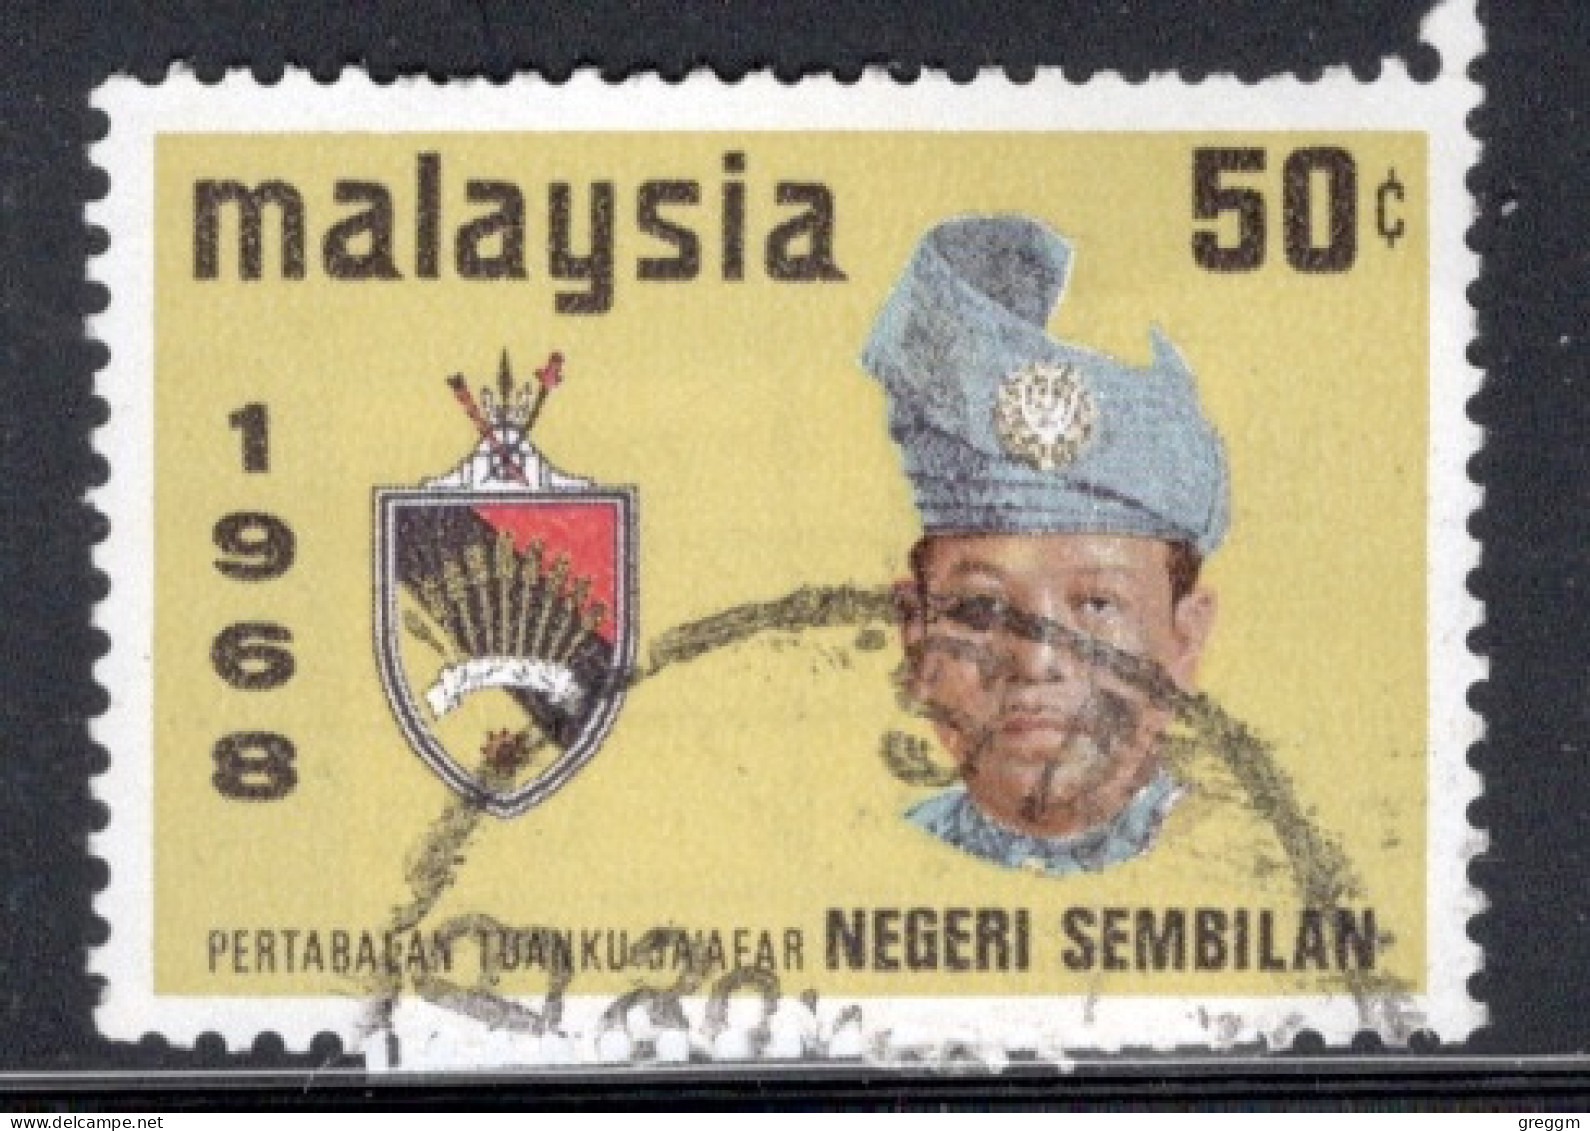 Malaysia Negri Sembilan 1968 Single Stamp From The Tuanku Ja'afar & Coat Of Arms In Fine Used - Negri Sembilan